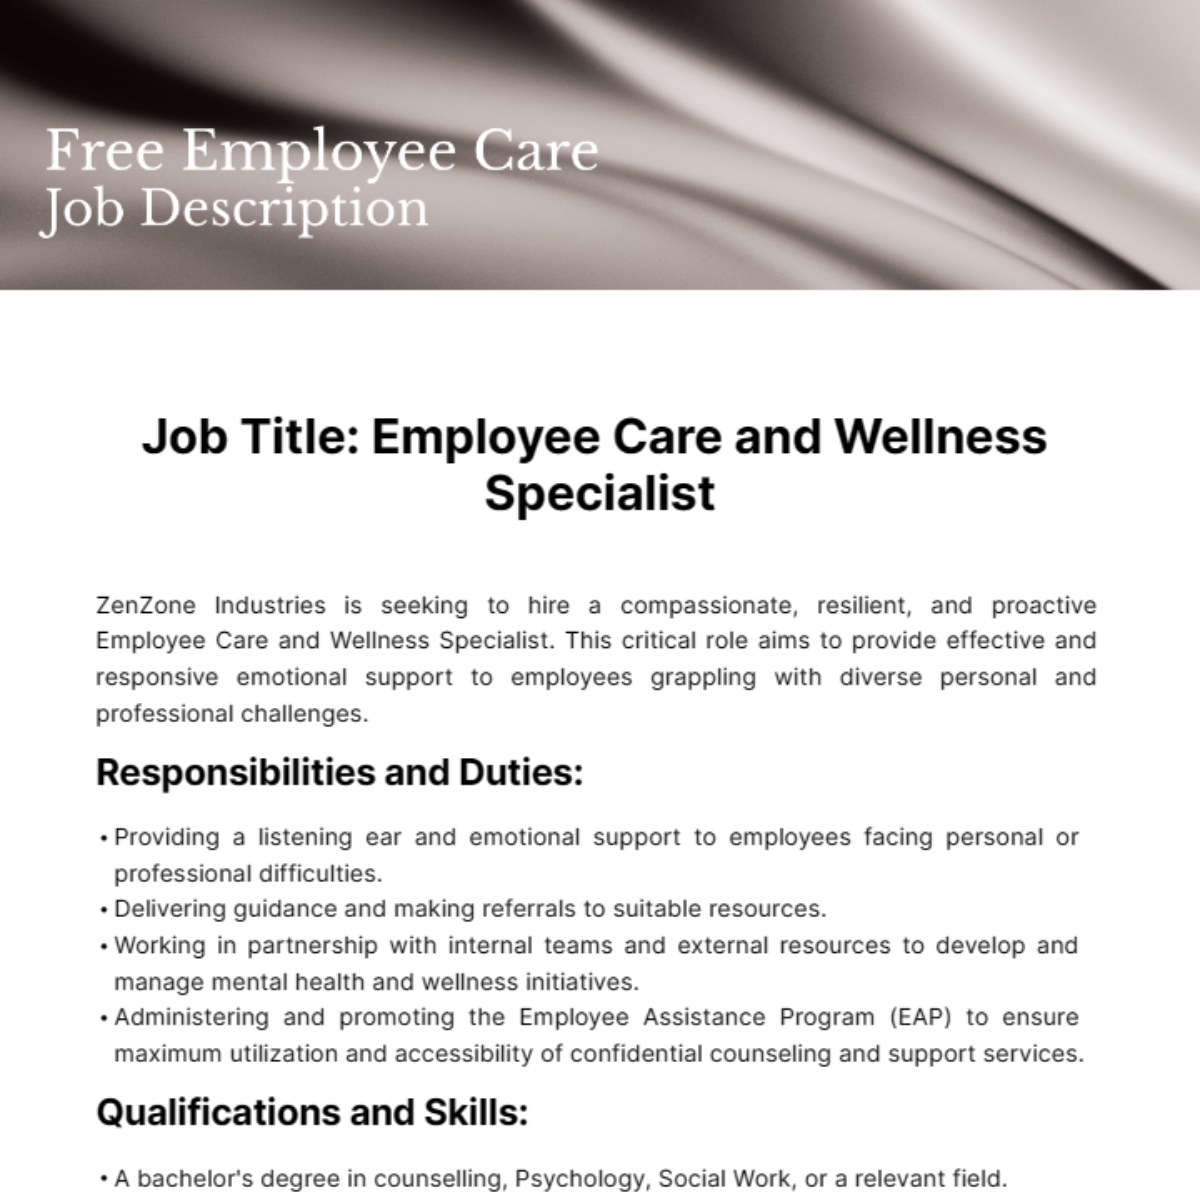 Free Employee Care Job Description Template